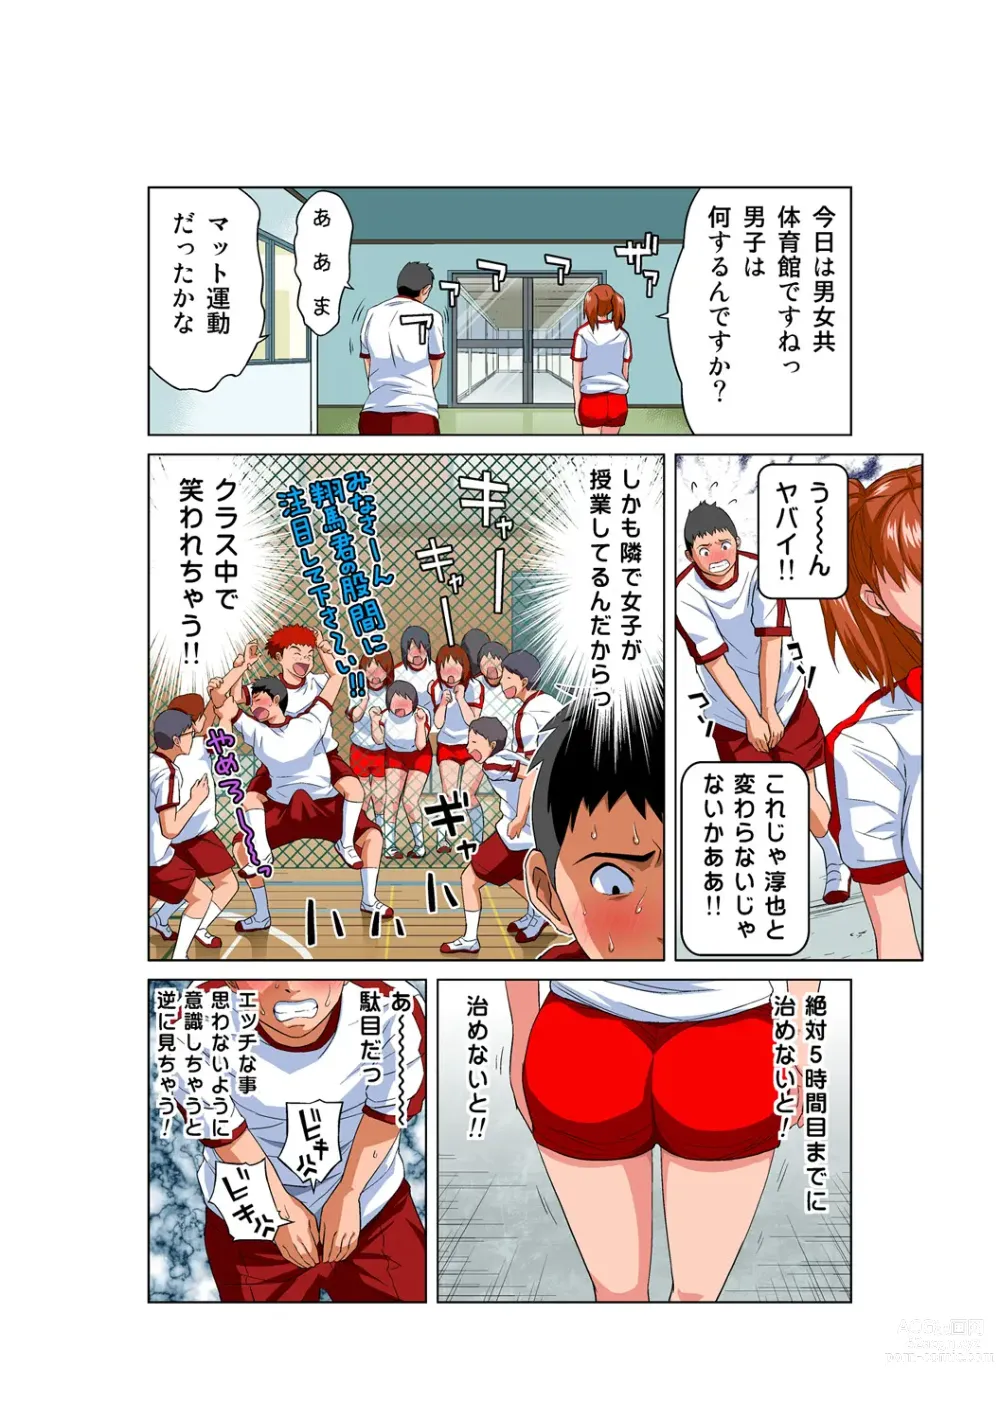 Page 11 of manga HiME-Mania Vol. 51